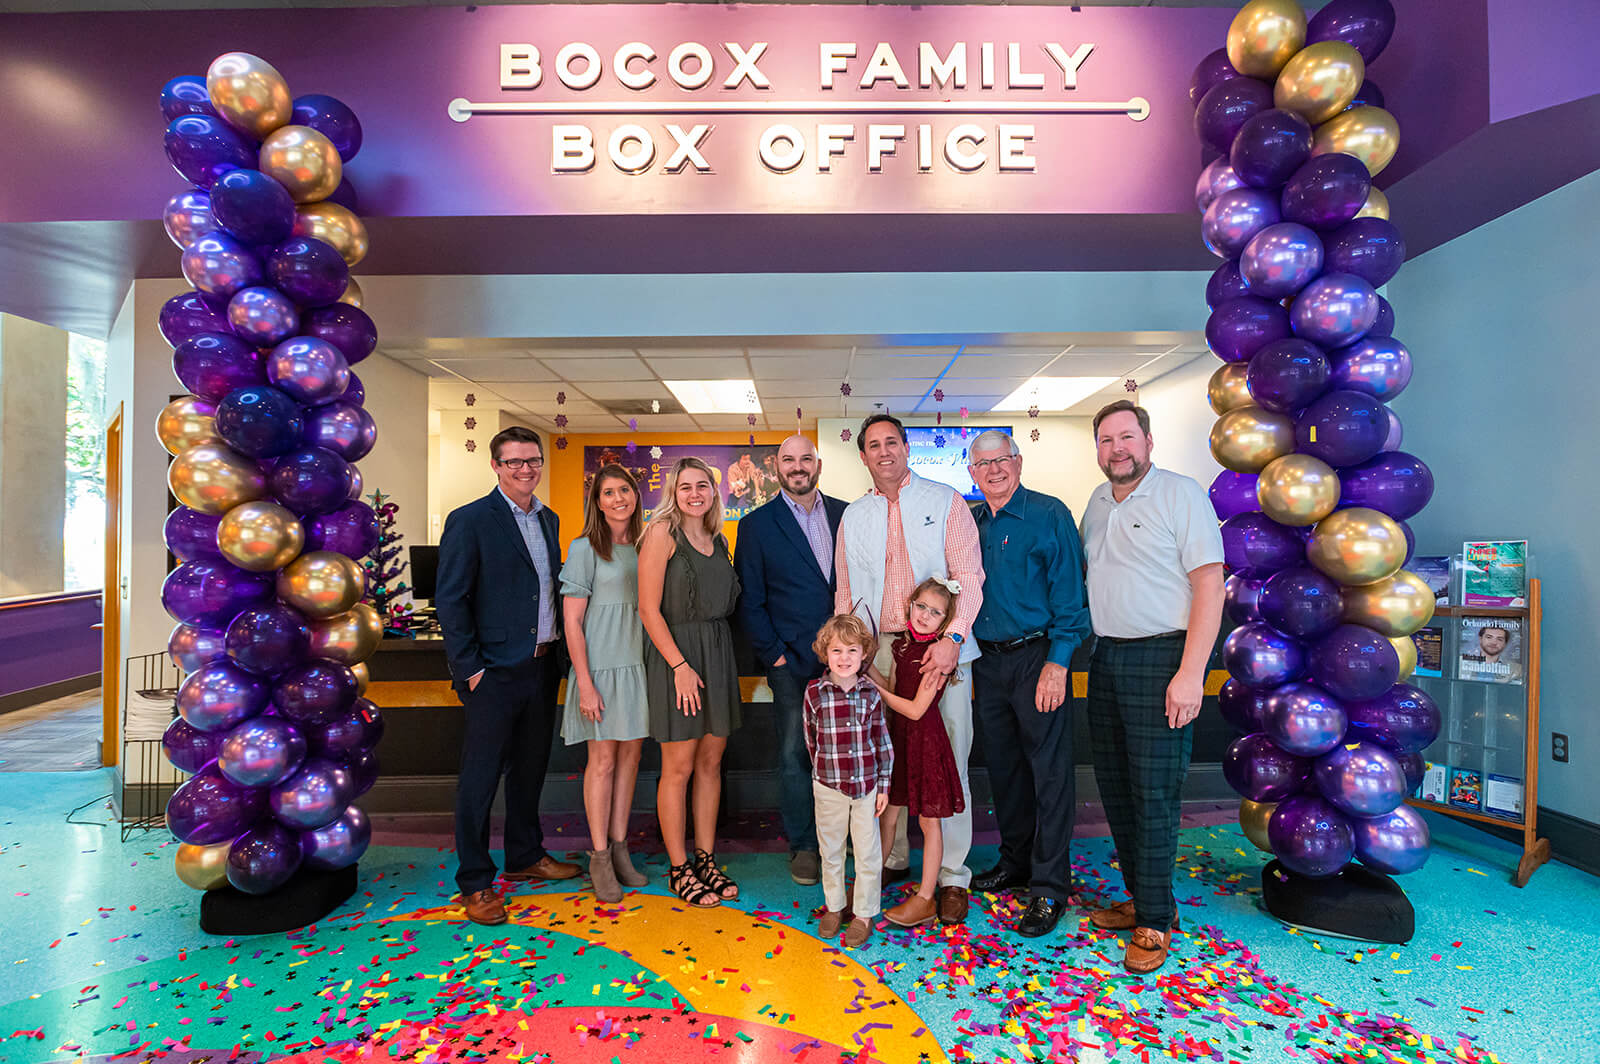 Bocox Family Box Office: A Ticket to Lasting Impact